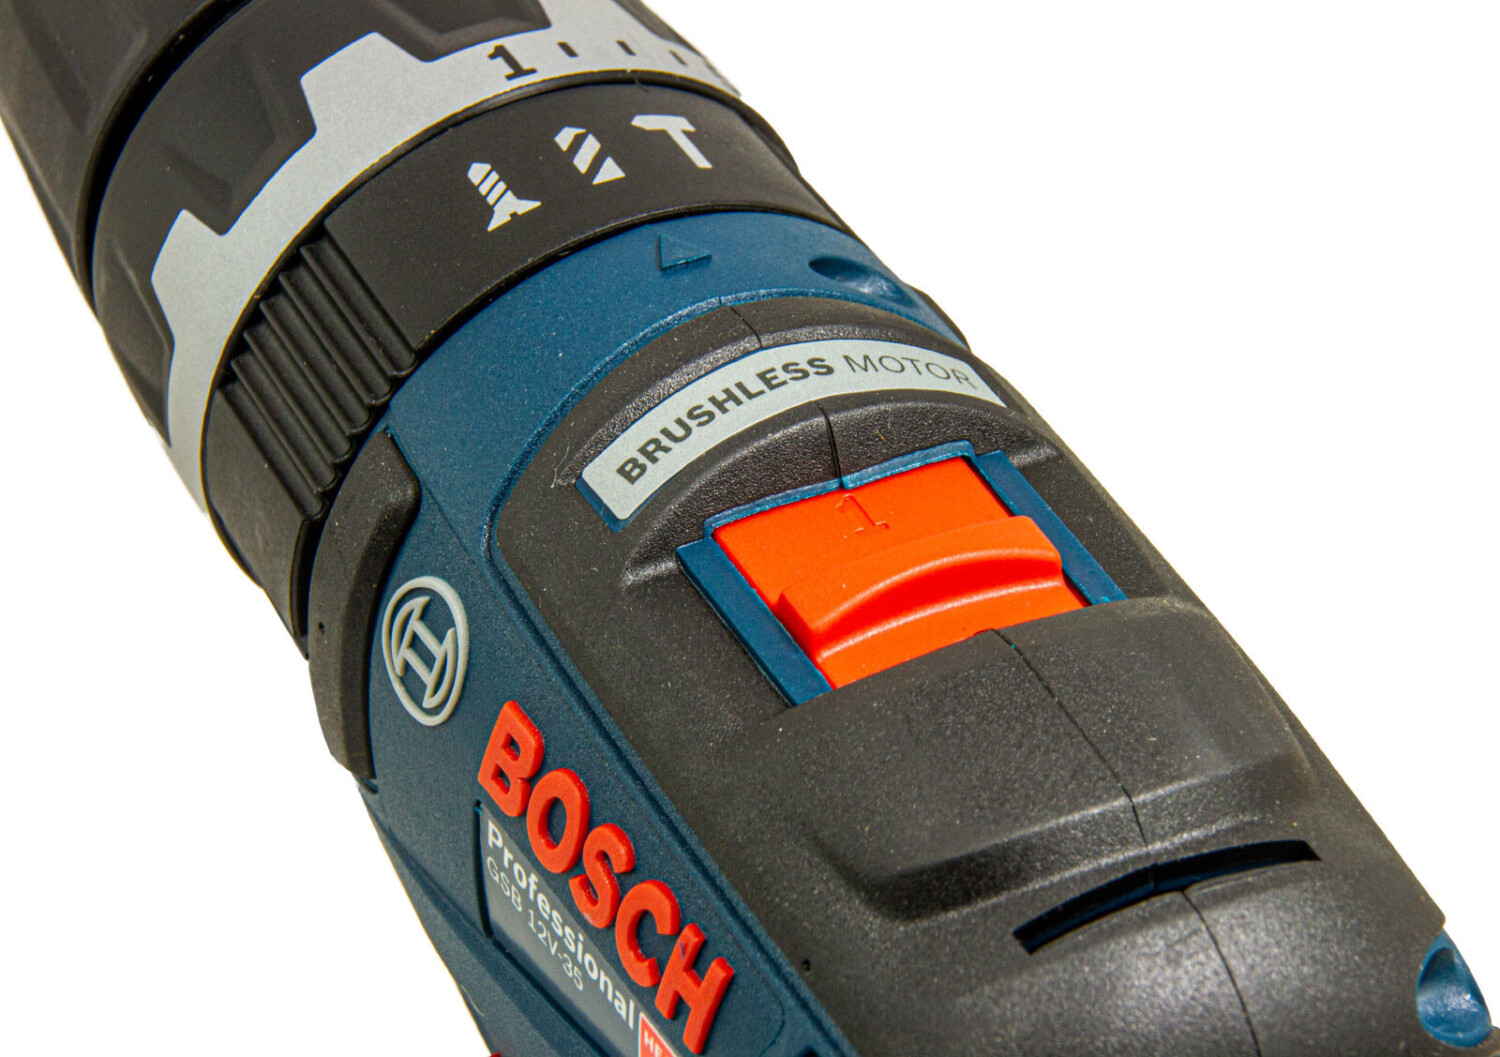 Bosch GSB 12V-35 2 x 3.0 Ah + Ladegerät + L-Boxx (06019J9000) ab 169,90 € |  Preisvergleich bei